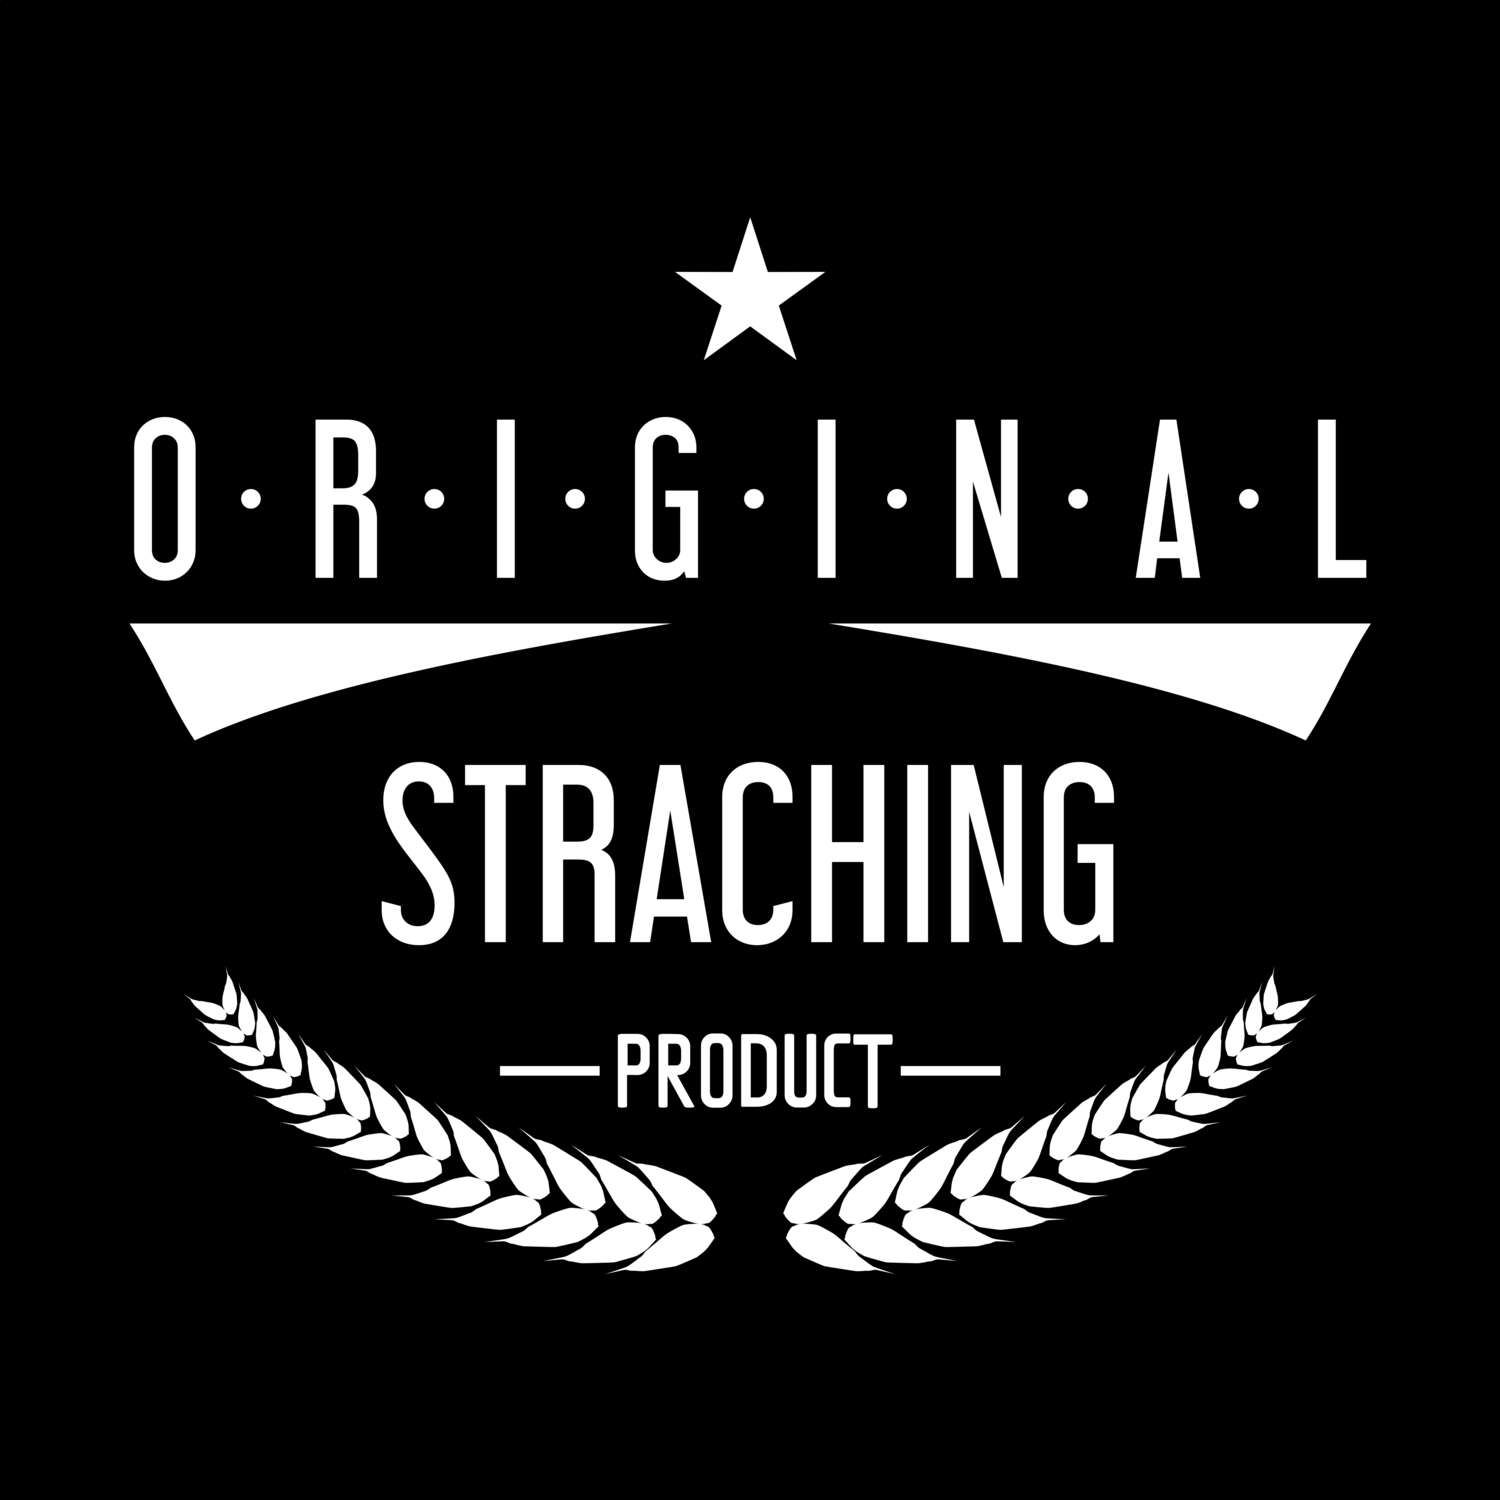 Straching T-Shirt »Original Product«